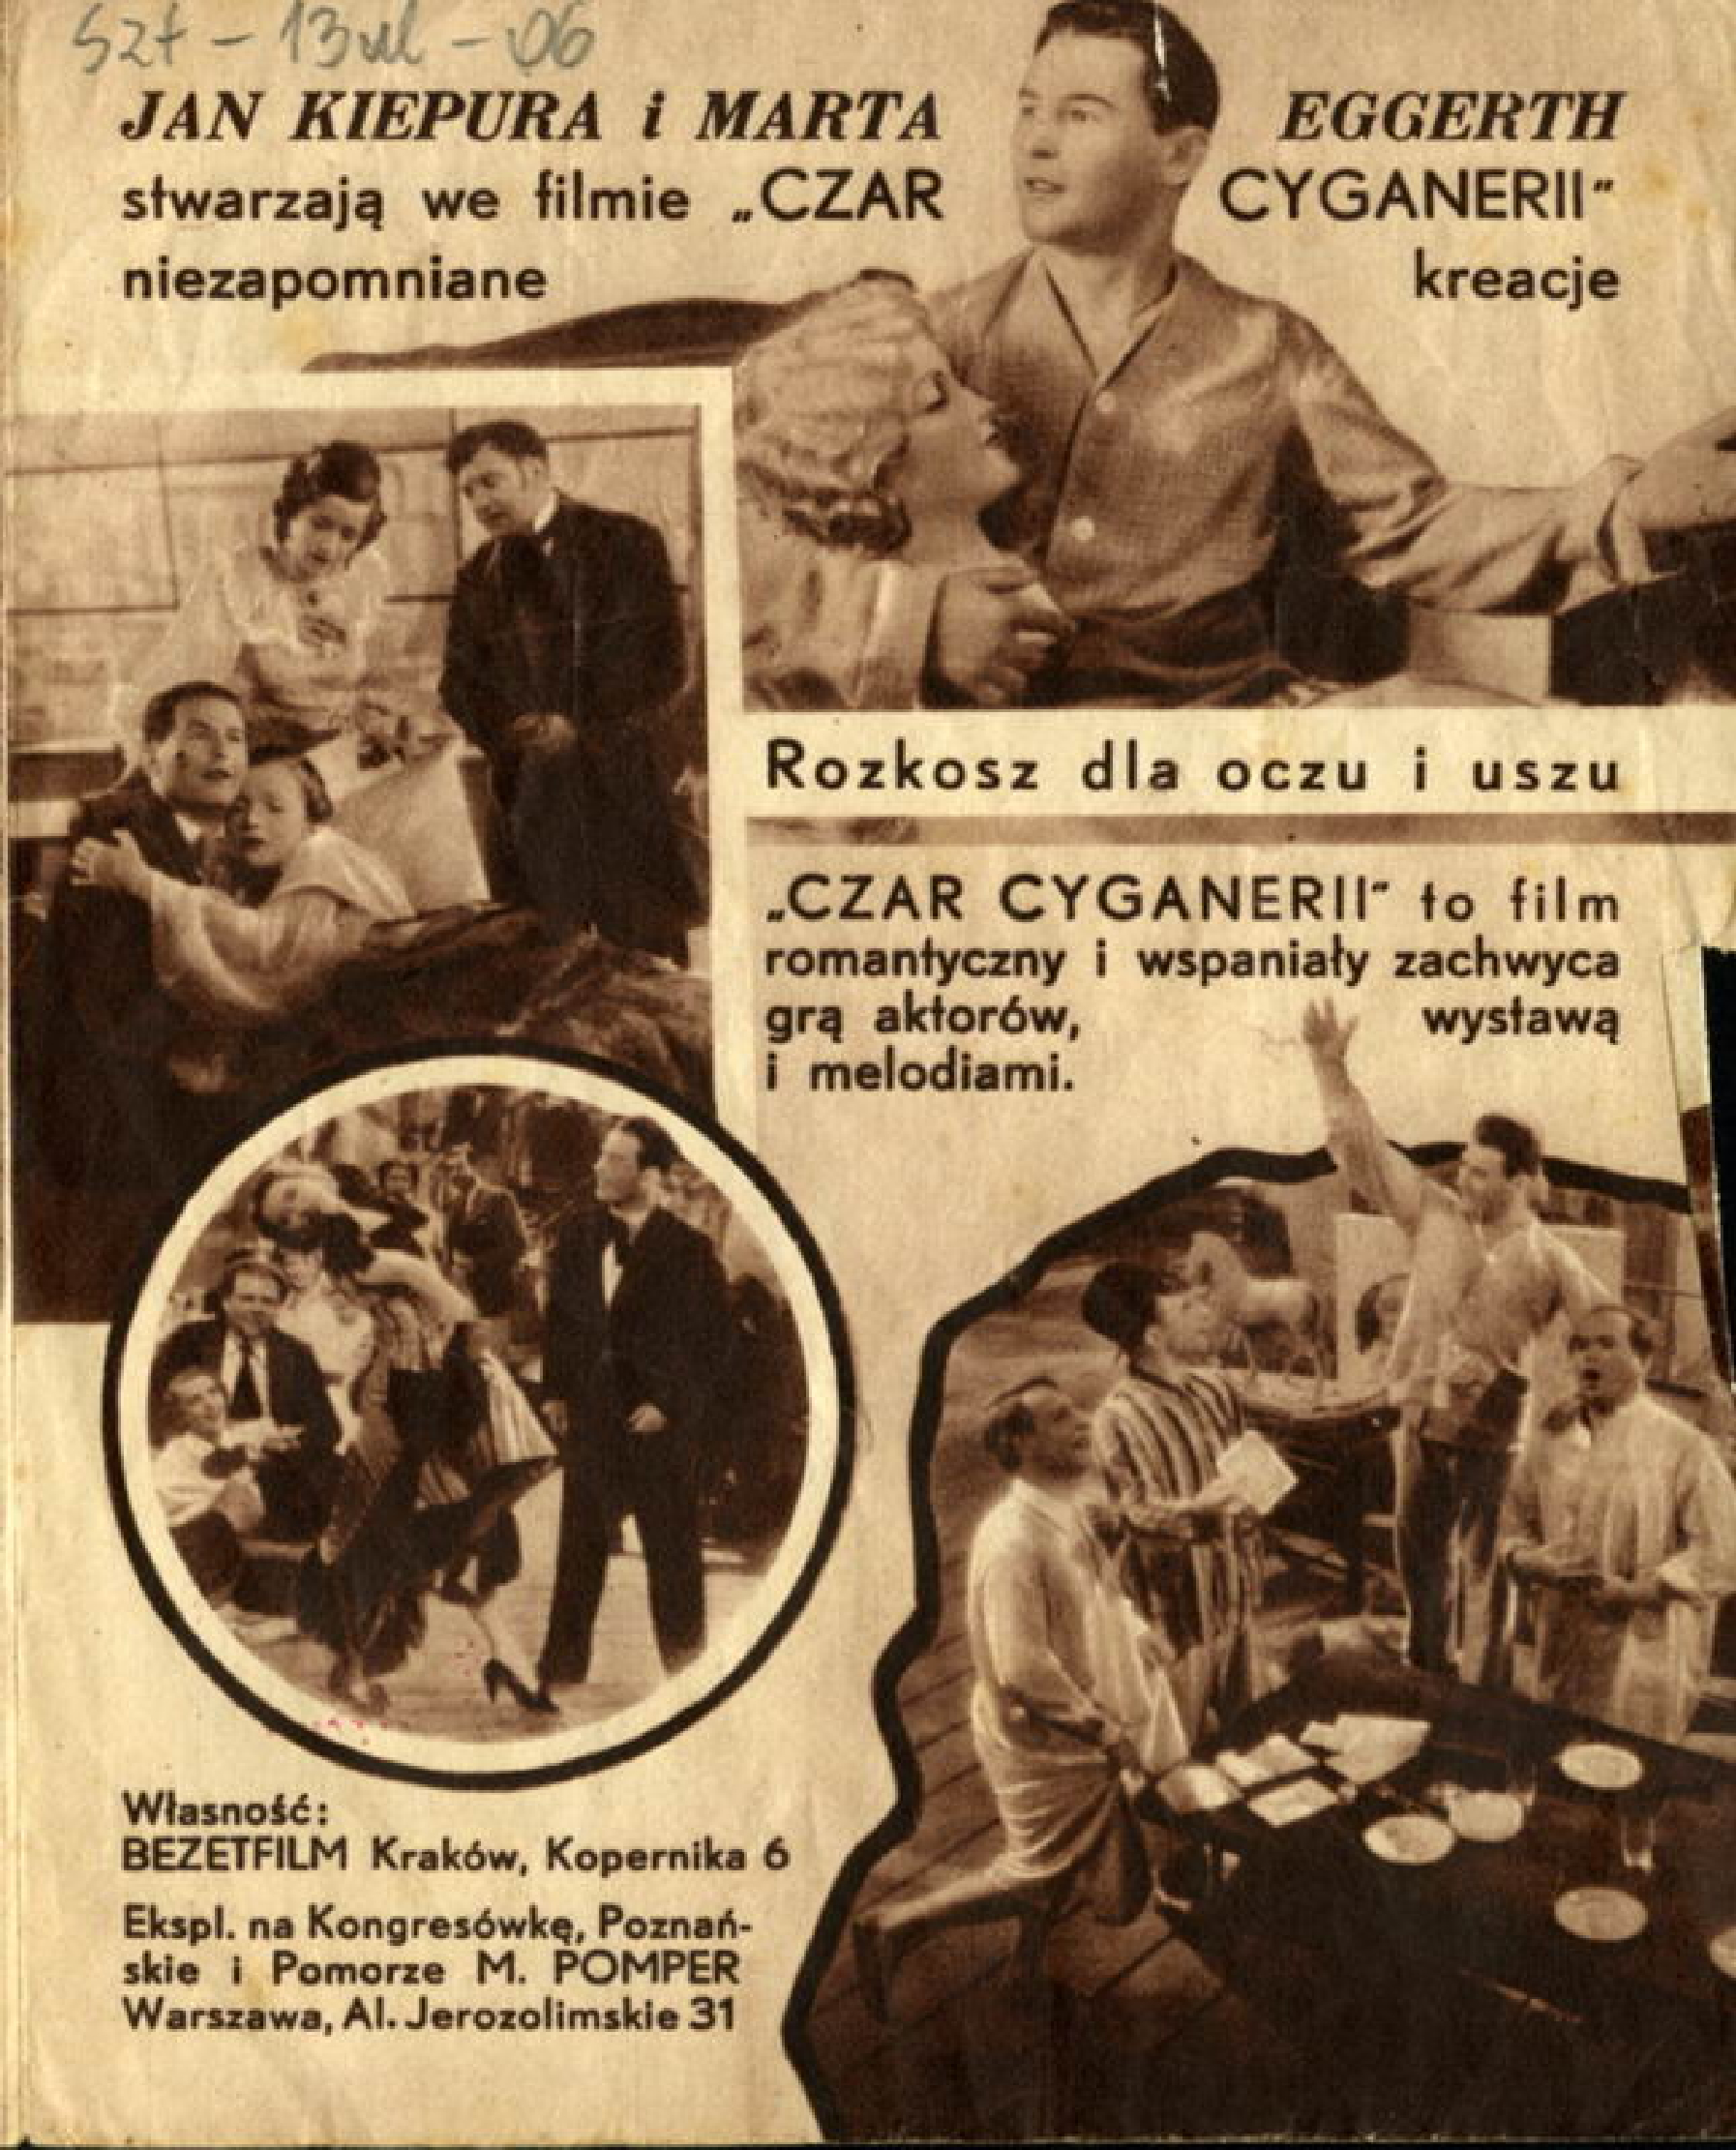 Prospekt reklamowy filmu pt. "Czar Cyganerii", 1937, Marta Eggerth, Jan Kiepura, mbc.cyfrowemazowsze.pl